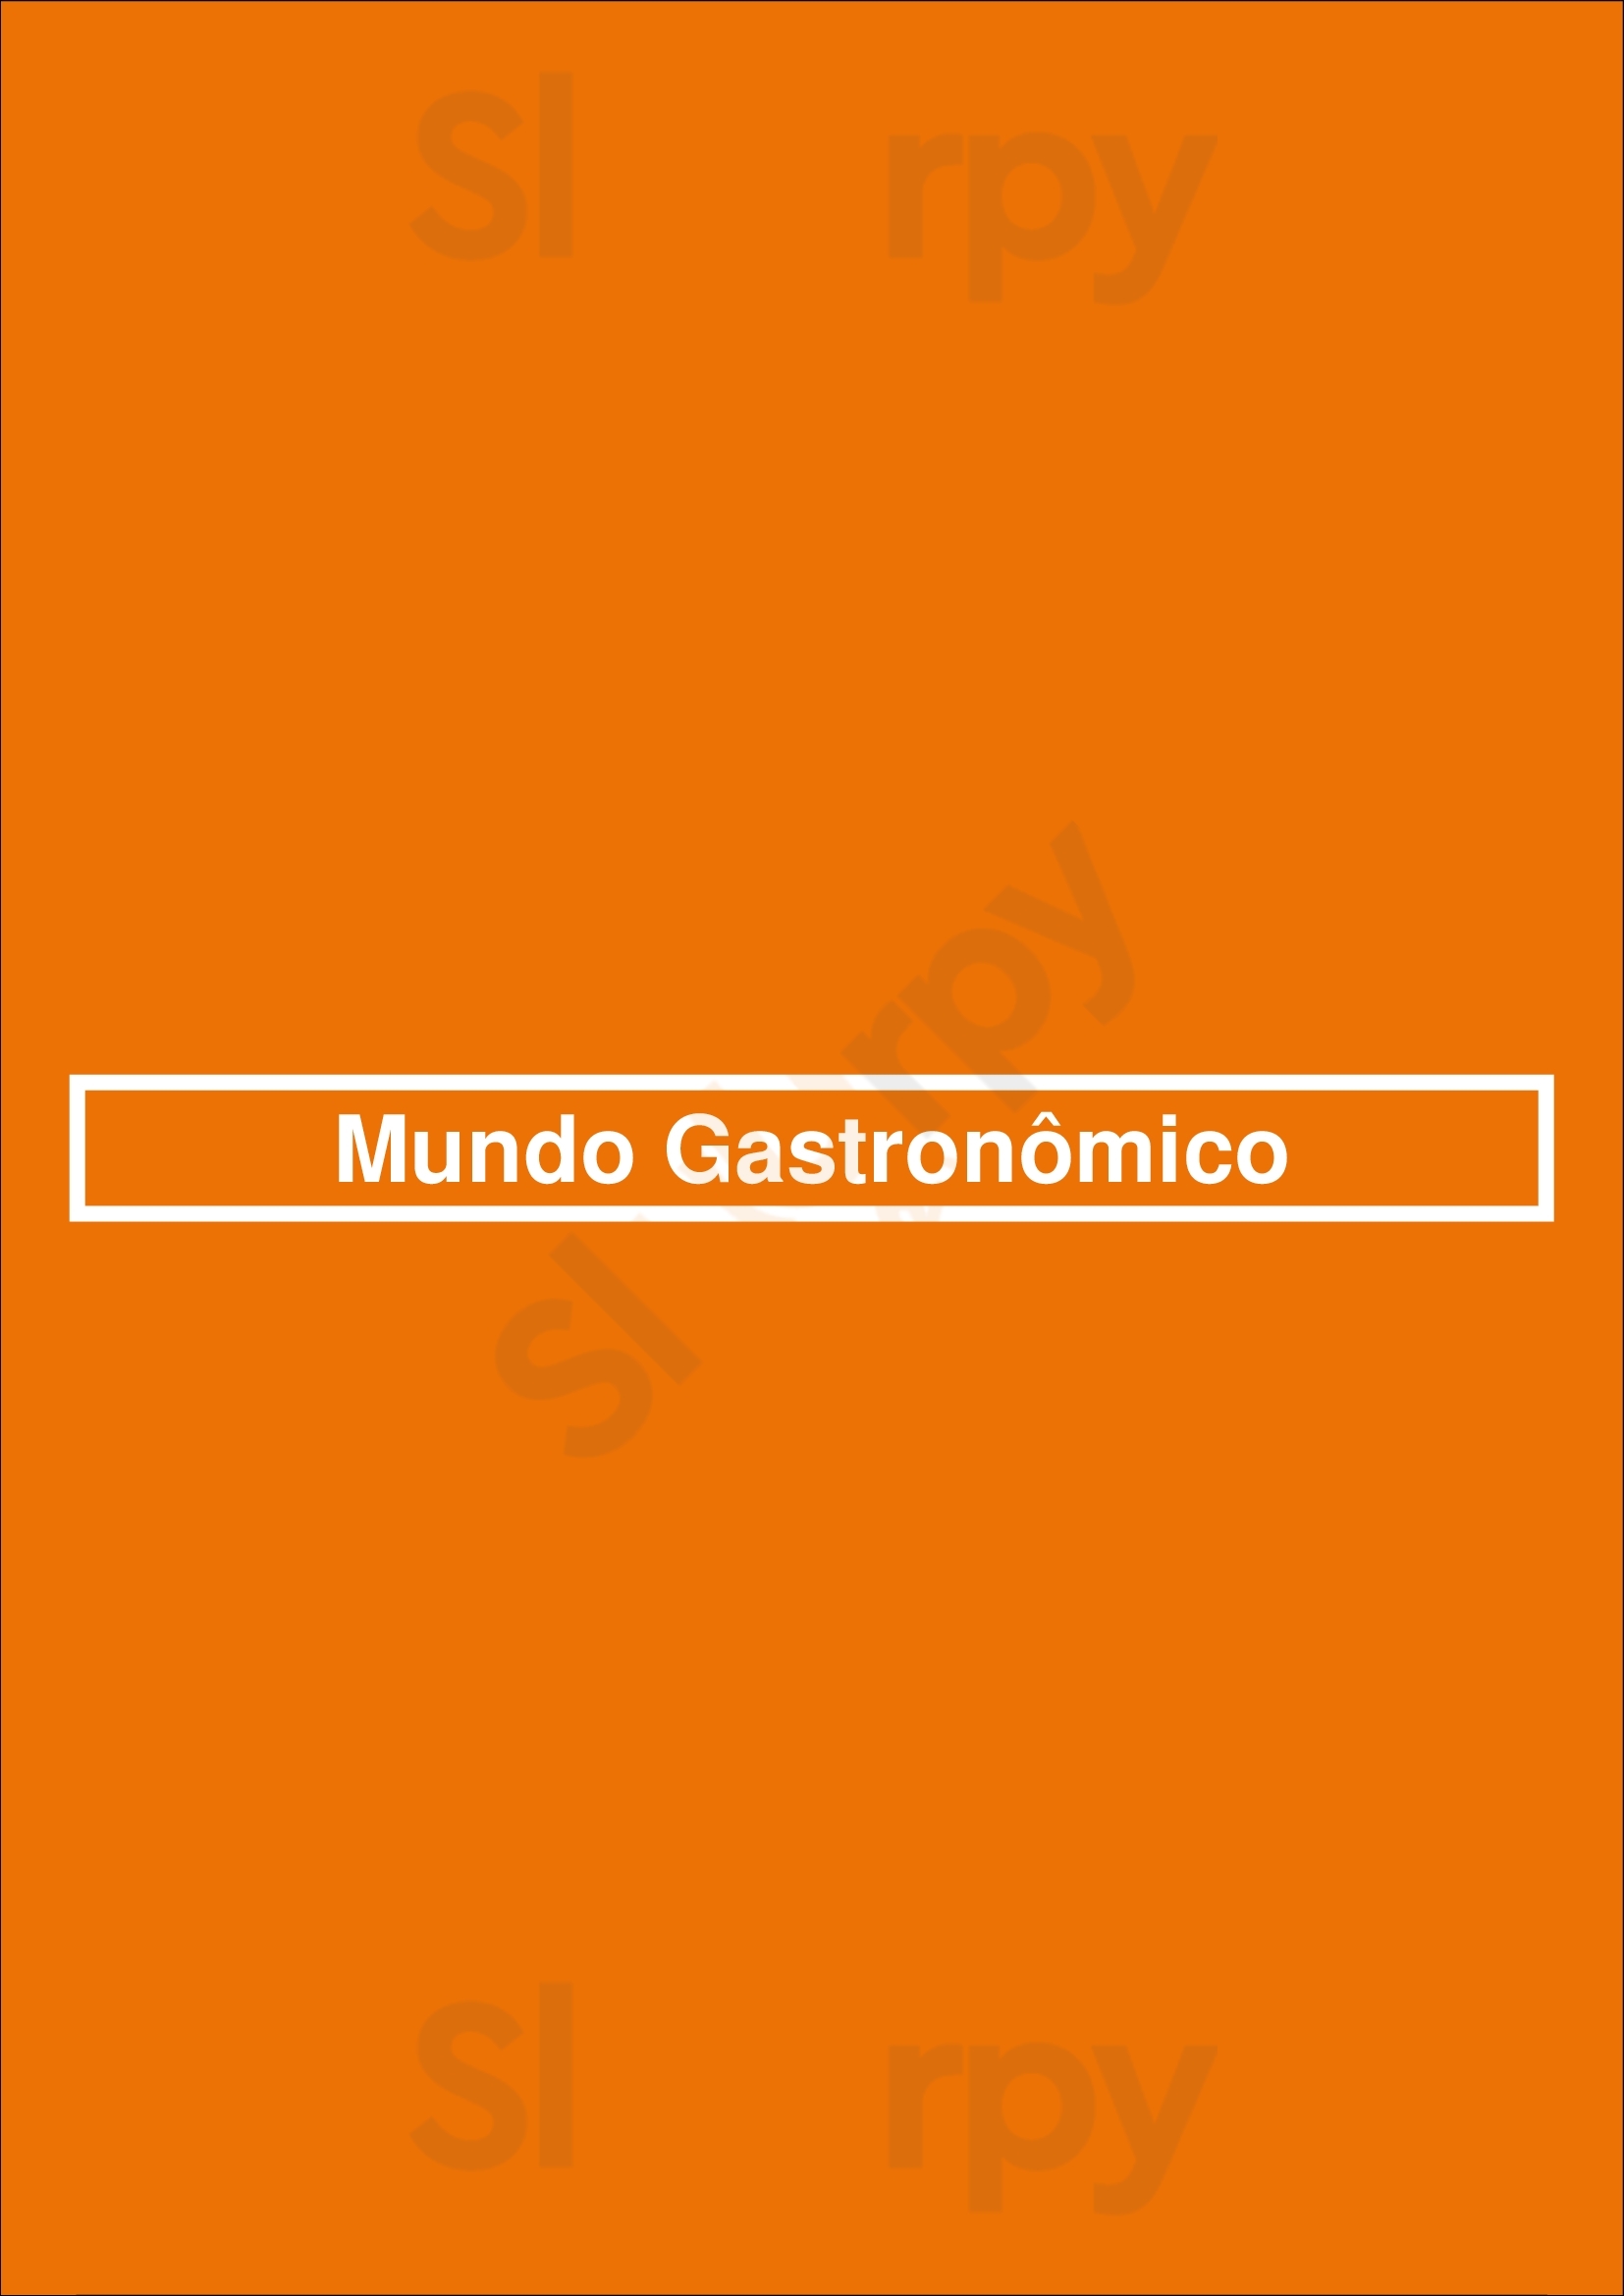 Mundo Gastronômico São Paulo Menu - 1